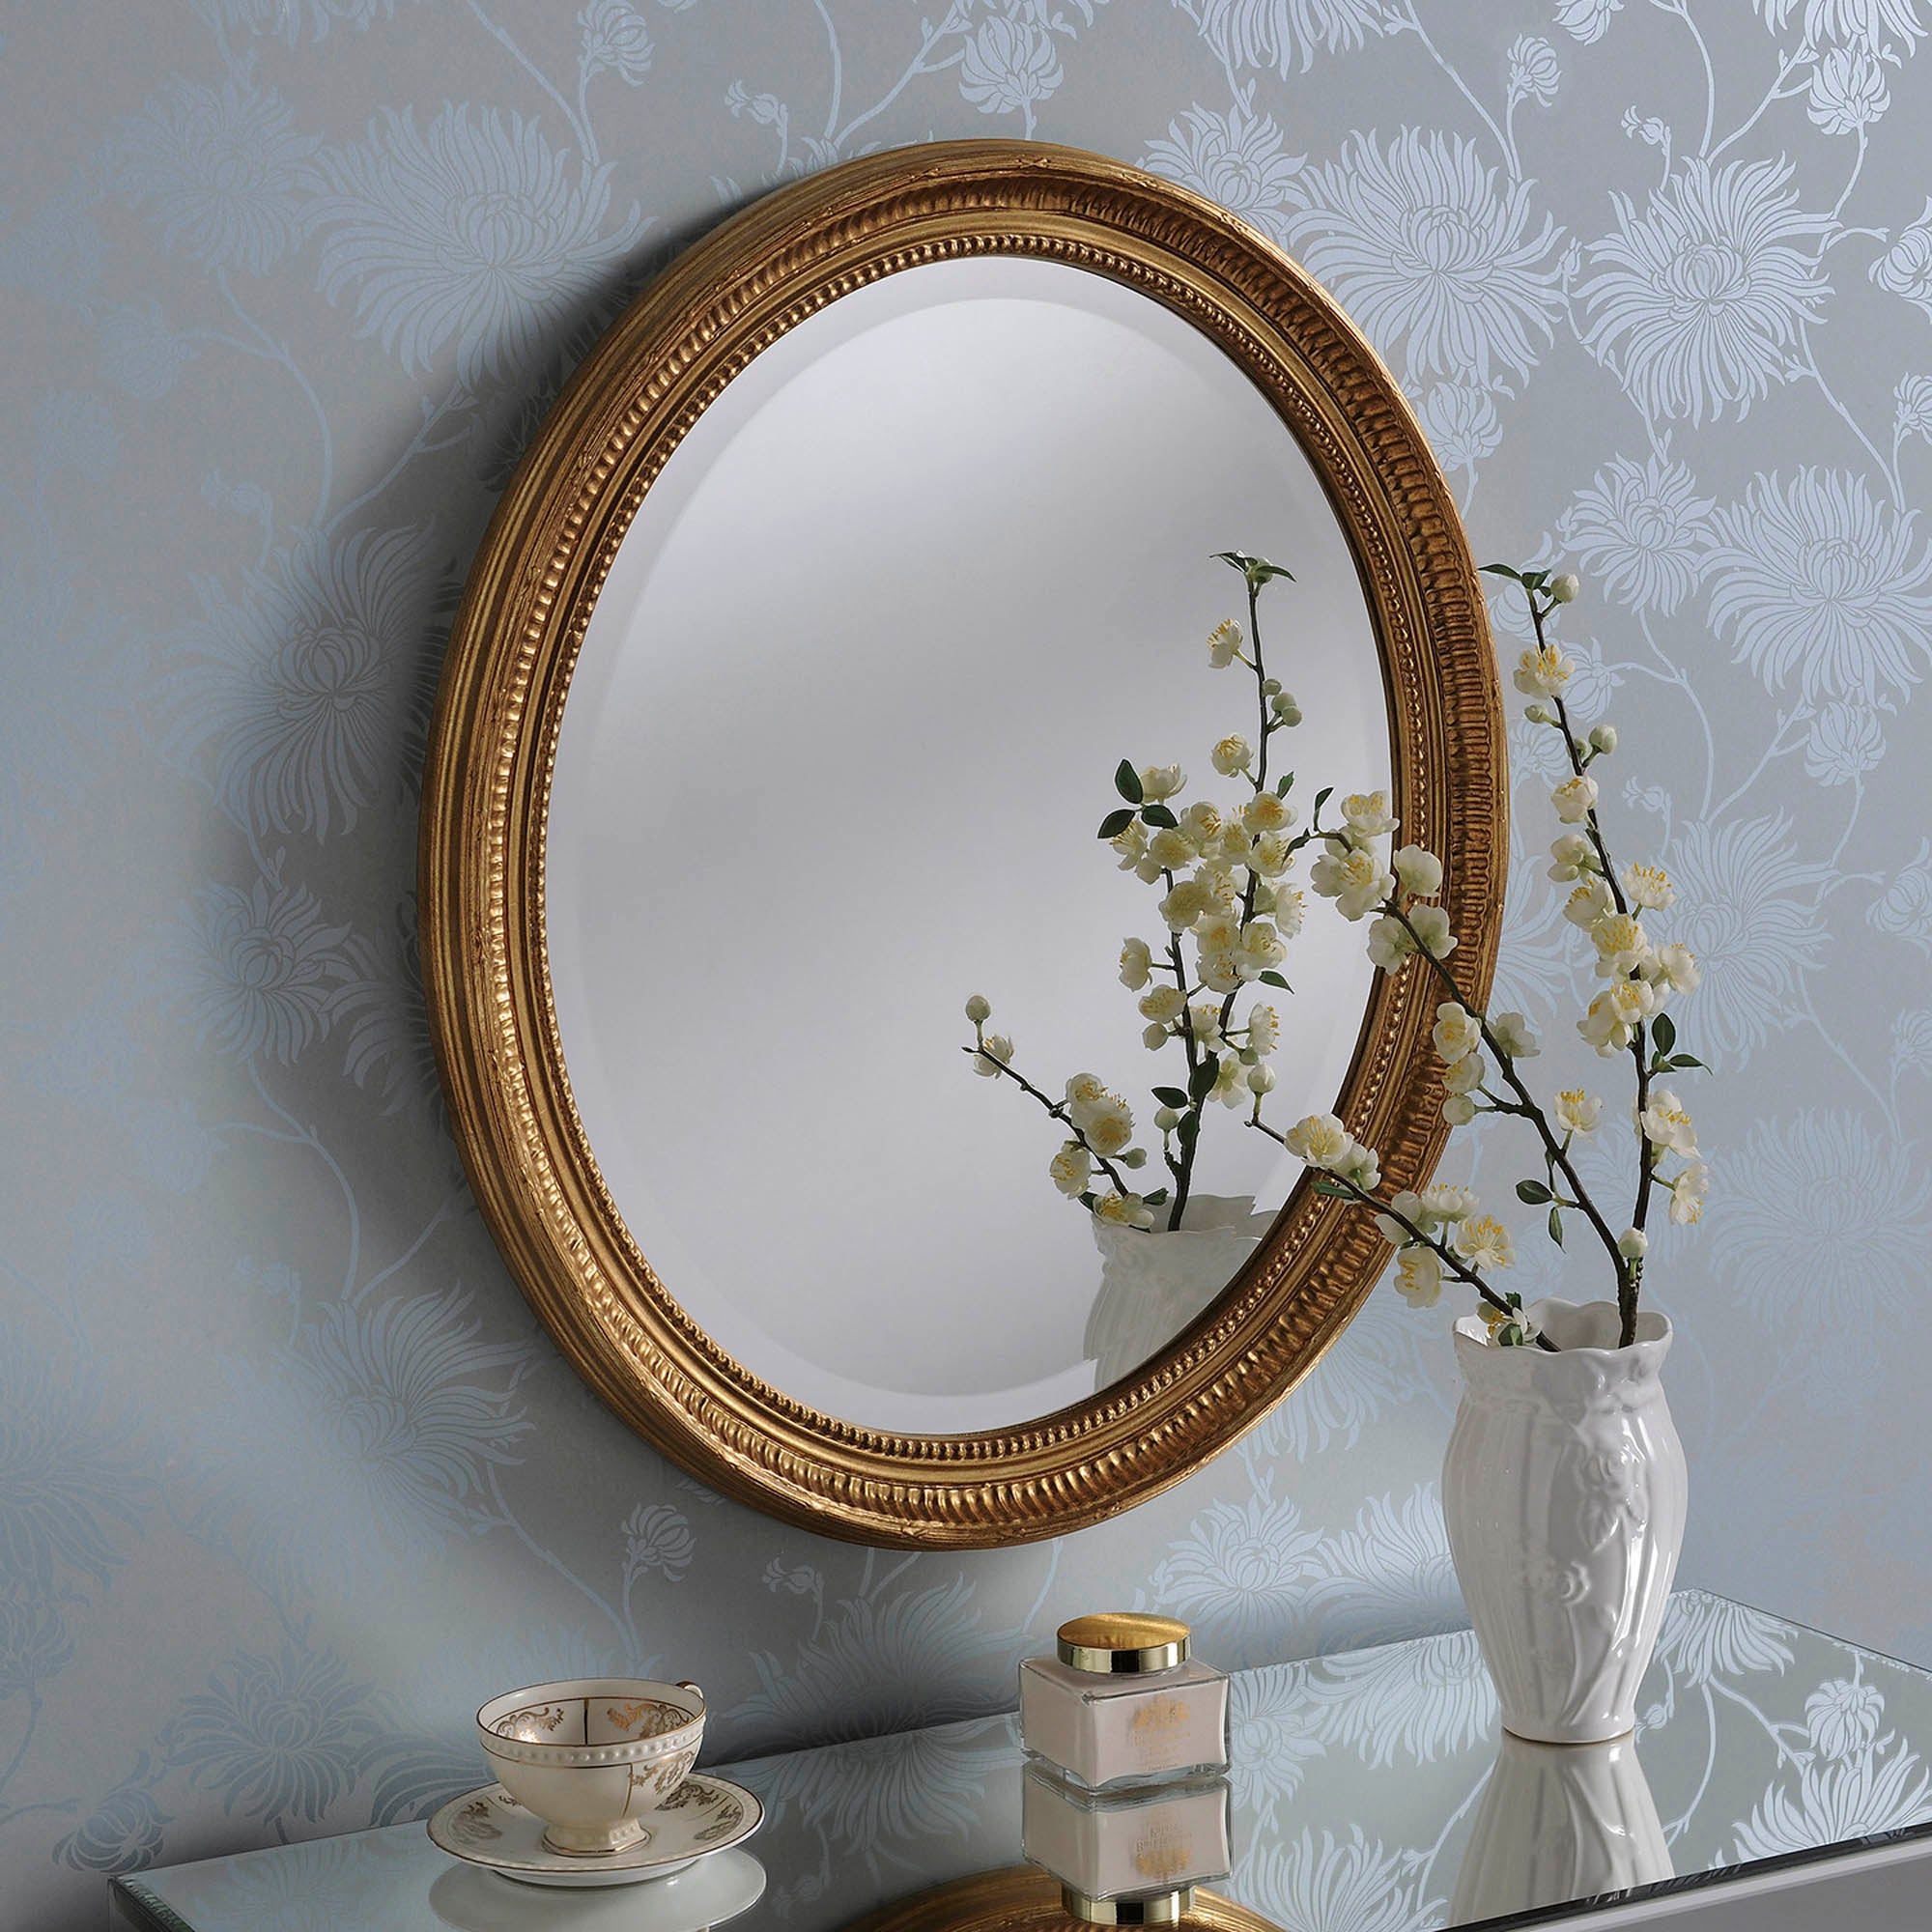 Yearn Ornate Oval Wall Mirror